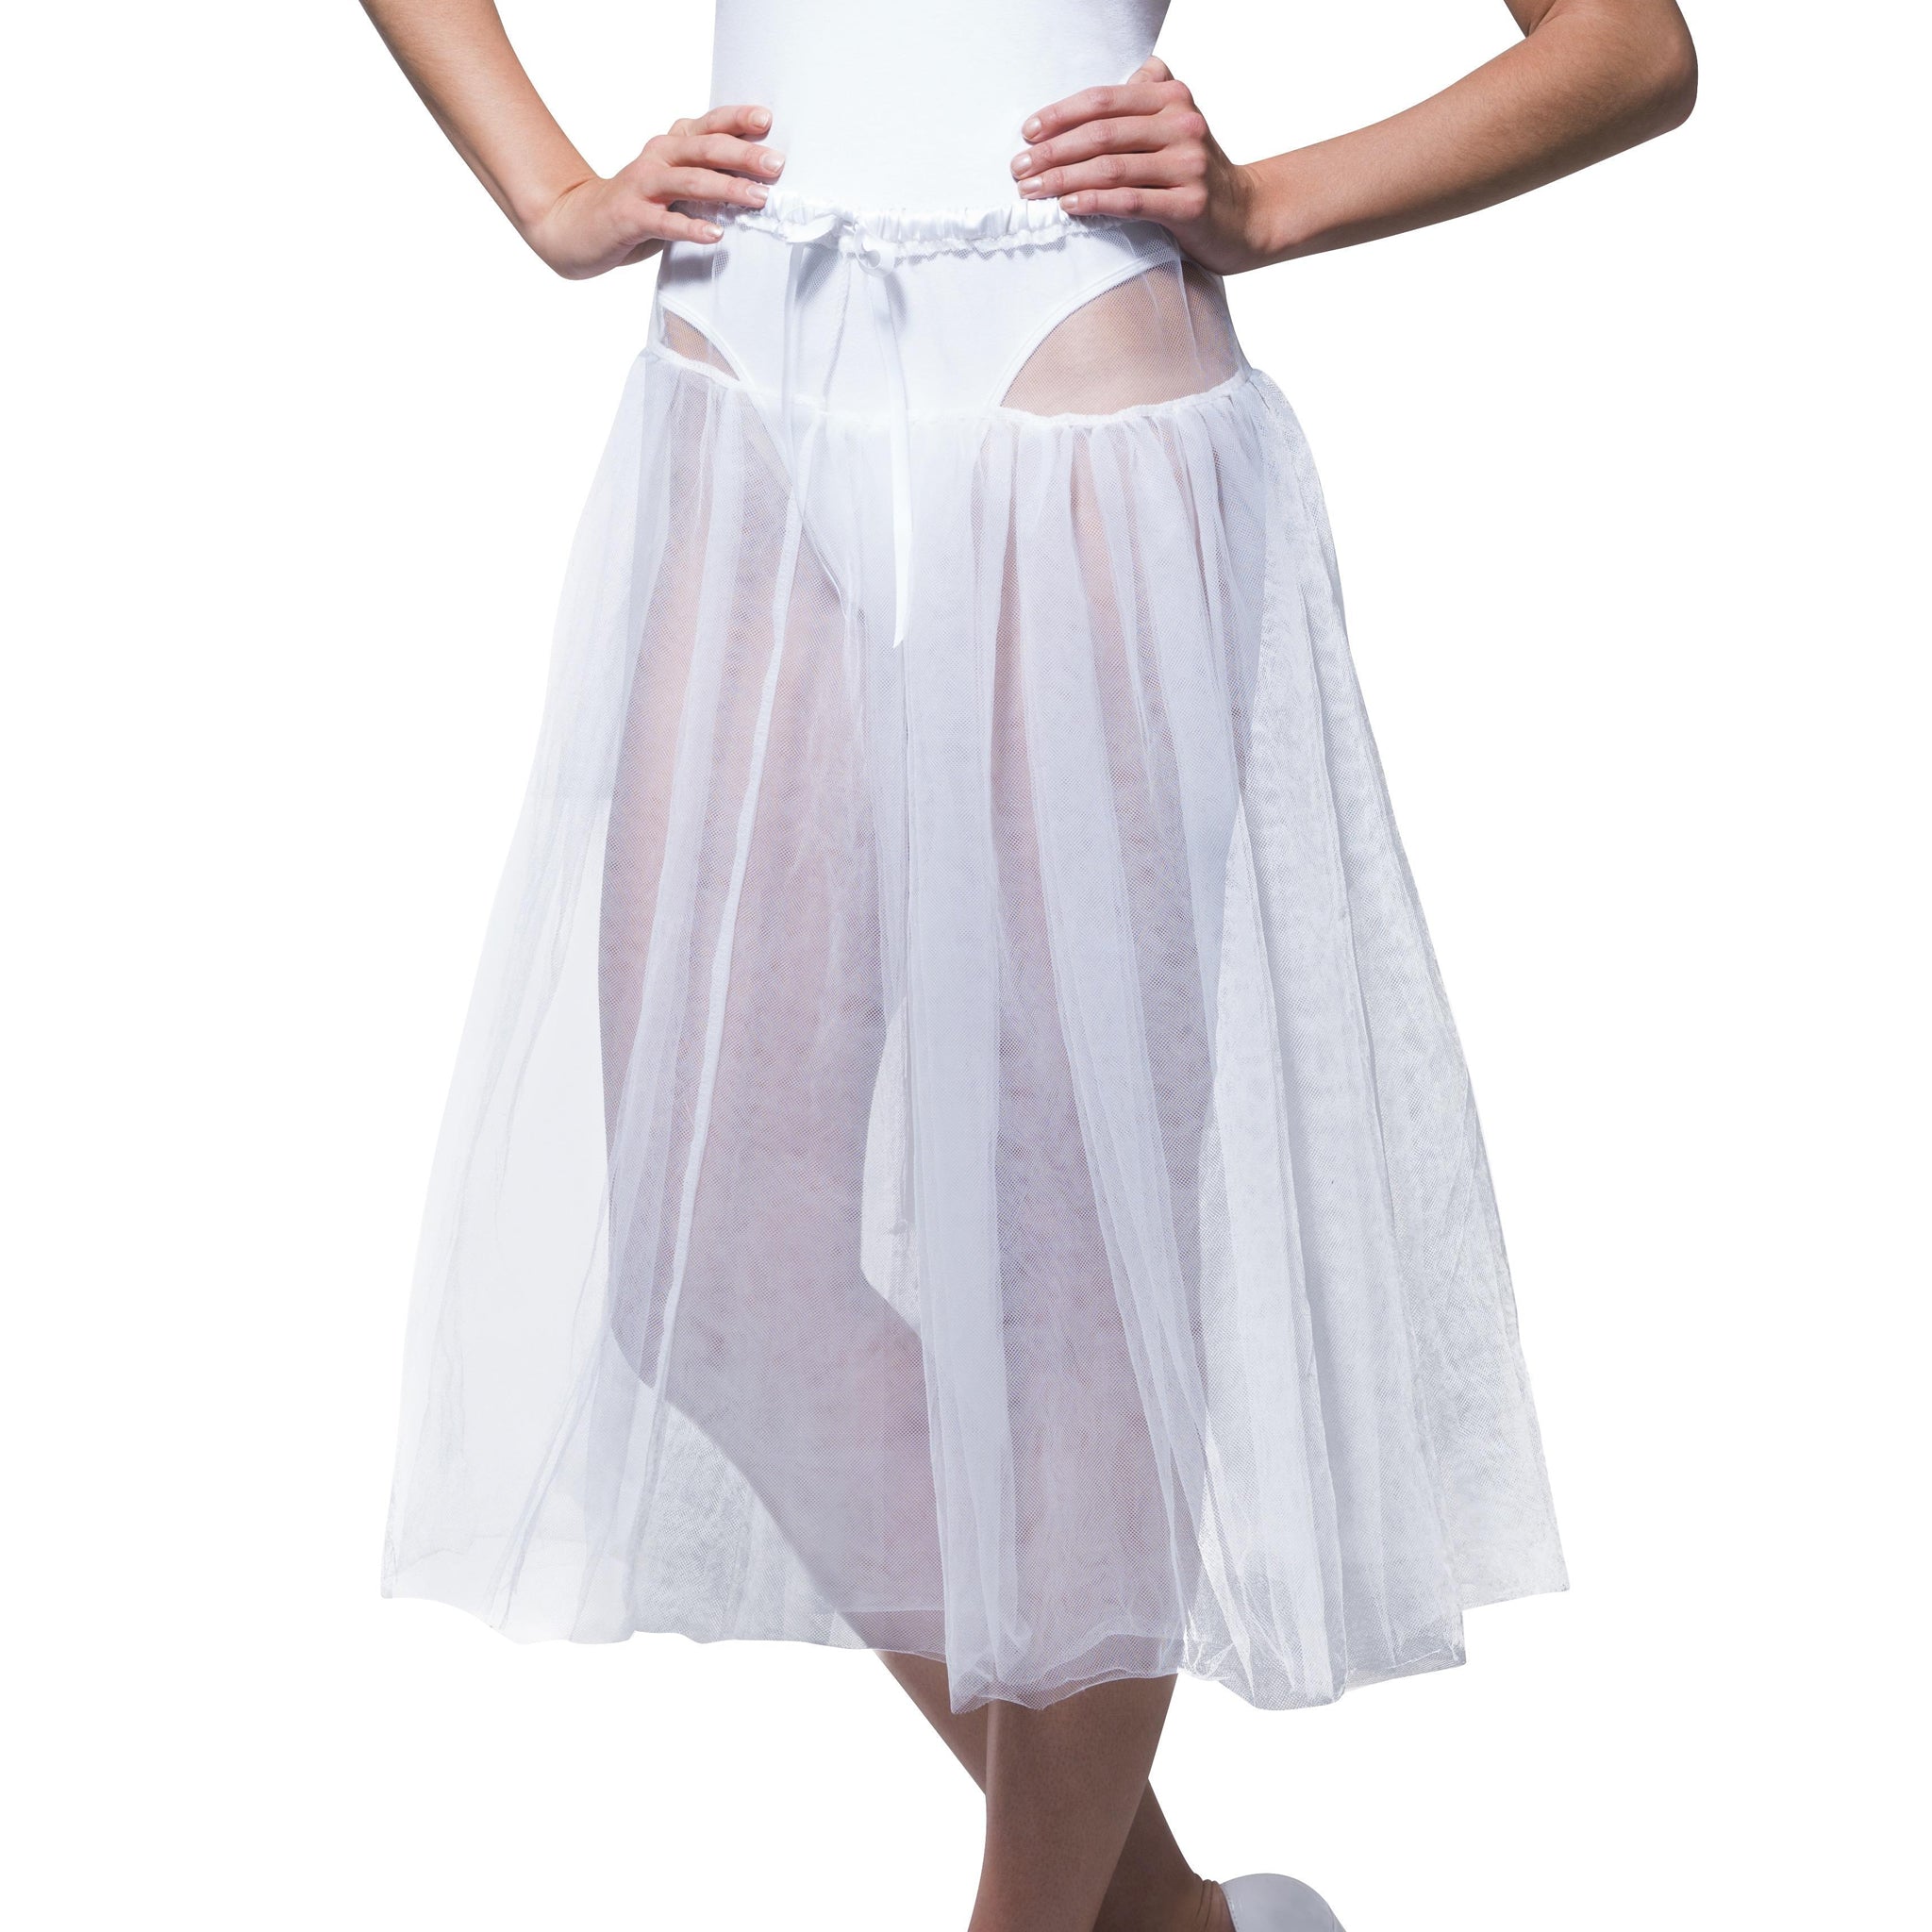 Long white 1950s petticoat